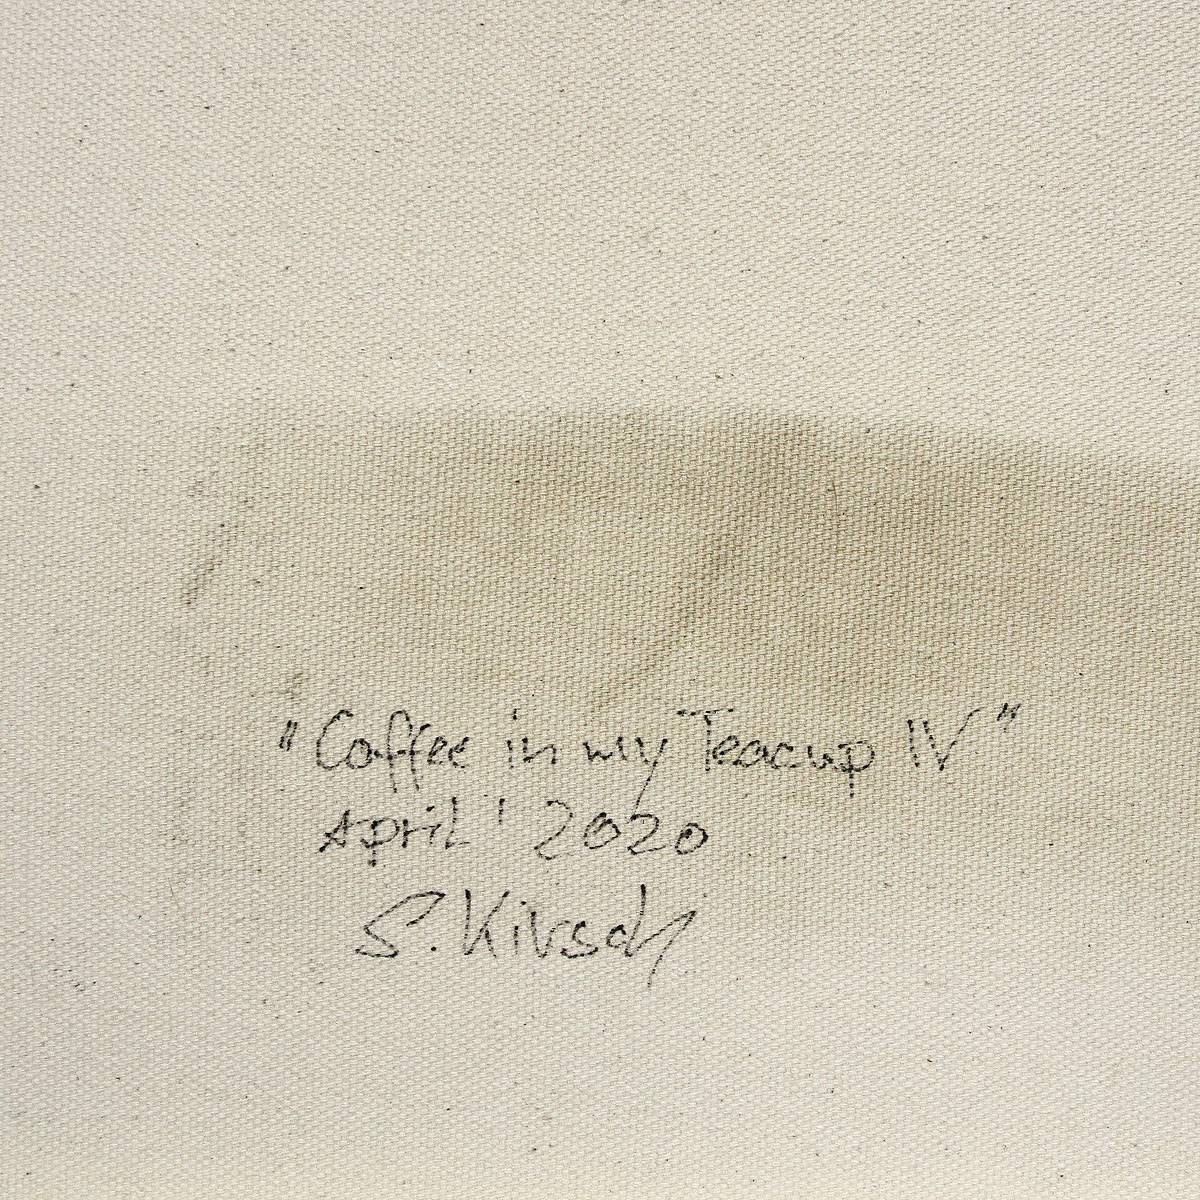 S. Kirsch: "Coffee in my Teacup IV", Originalgemälde (Unikat)